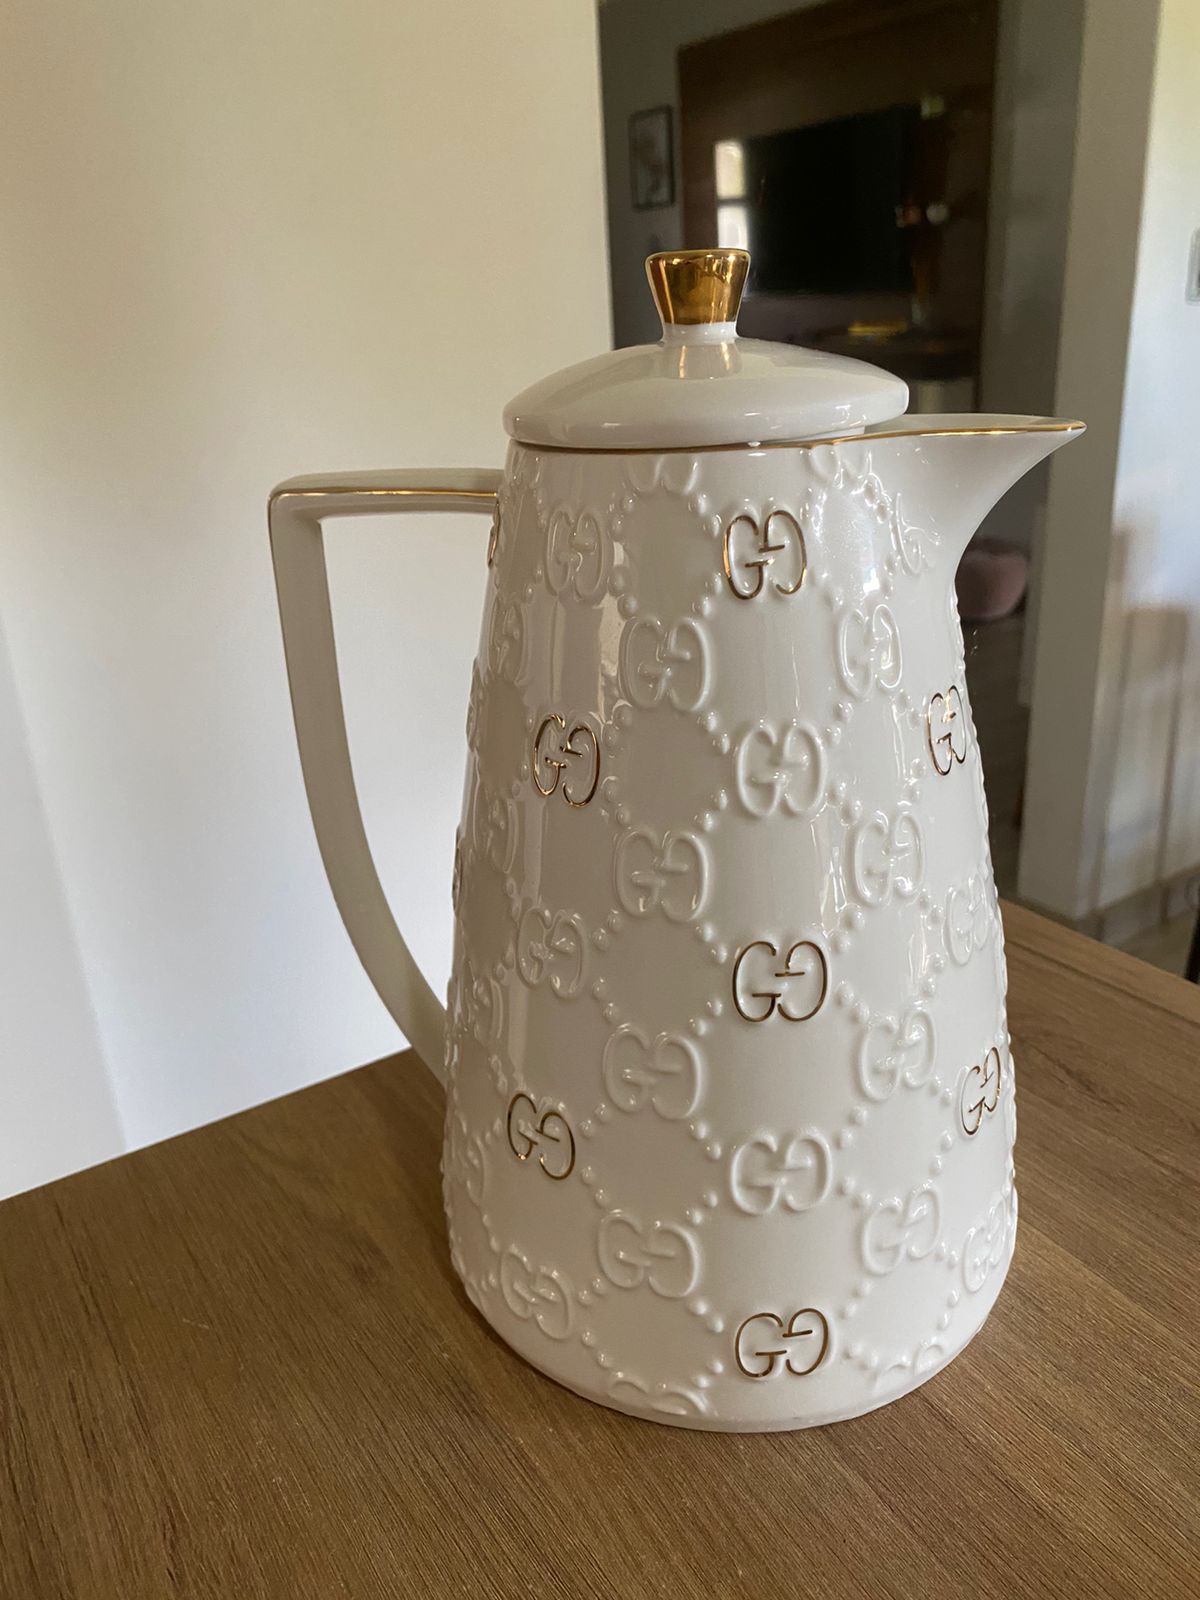 Garrafa Térmica de Porcelana 1 litro inspiração Gucci - Nolitan Decor